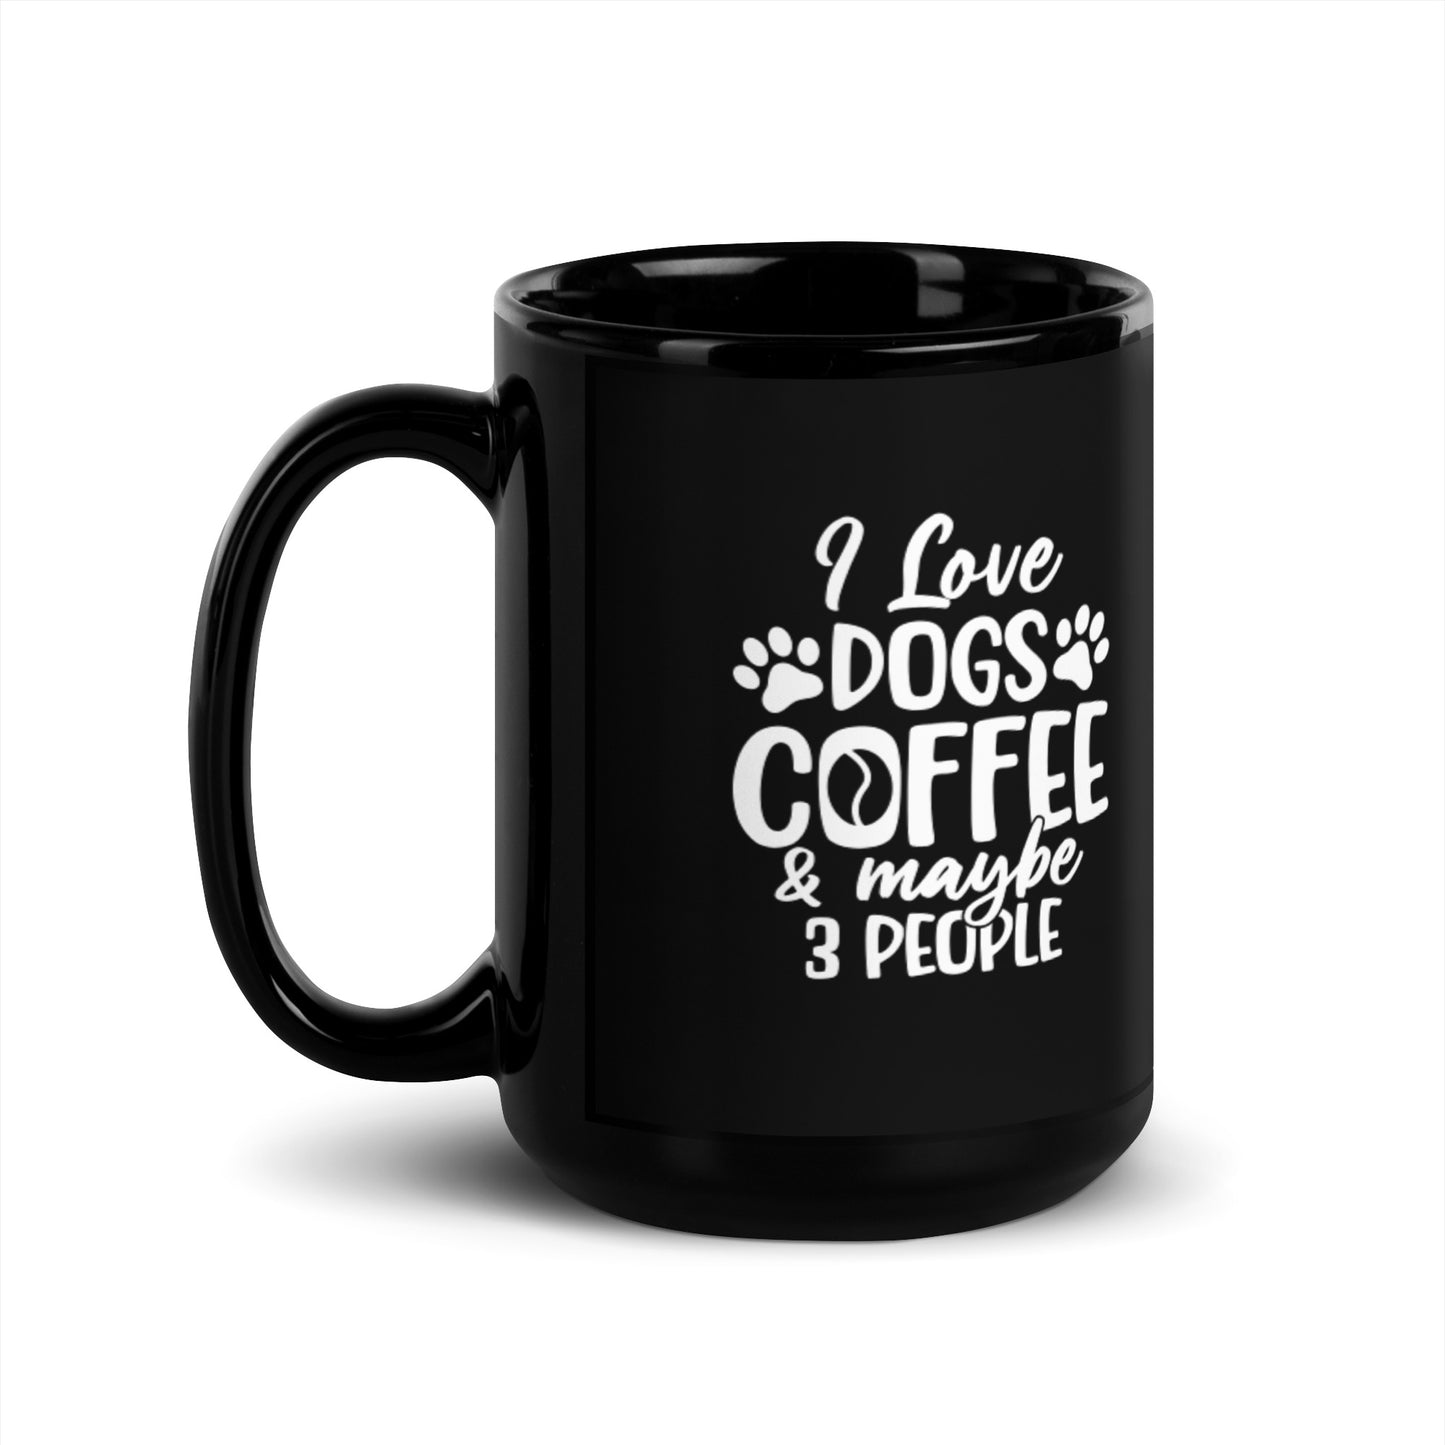 I Love Dogs Coffee & Maybe 3 People Black Glossy Mug